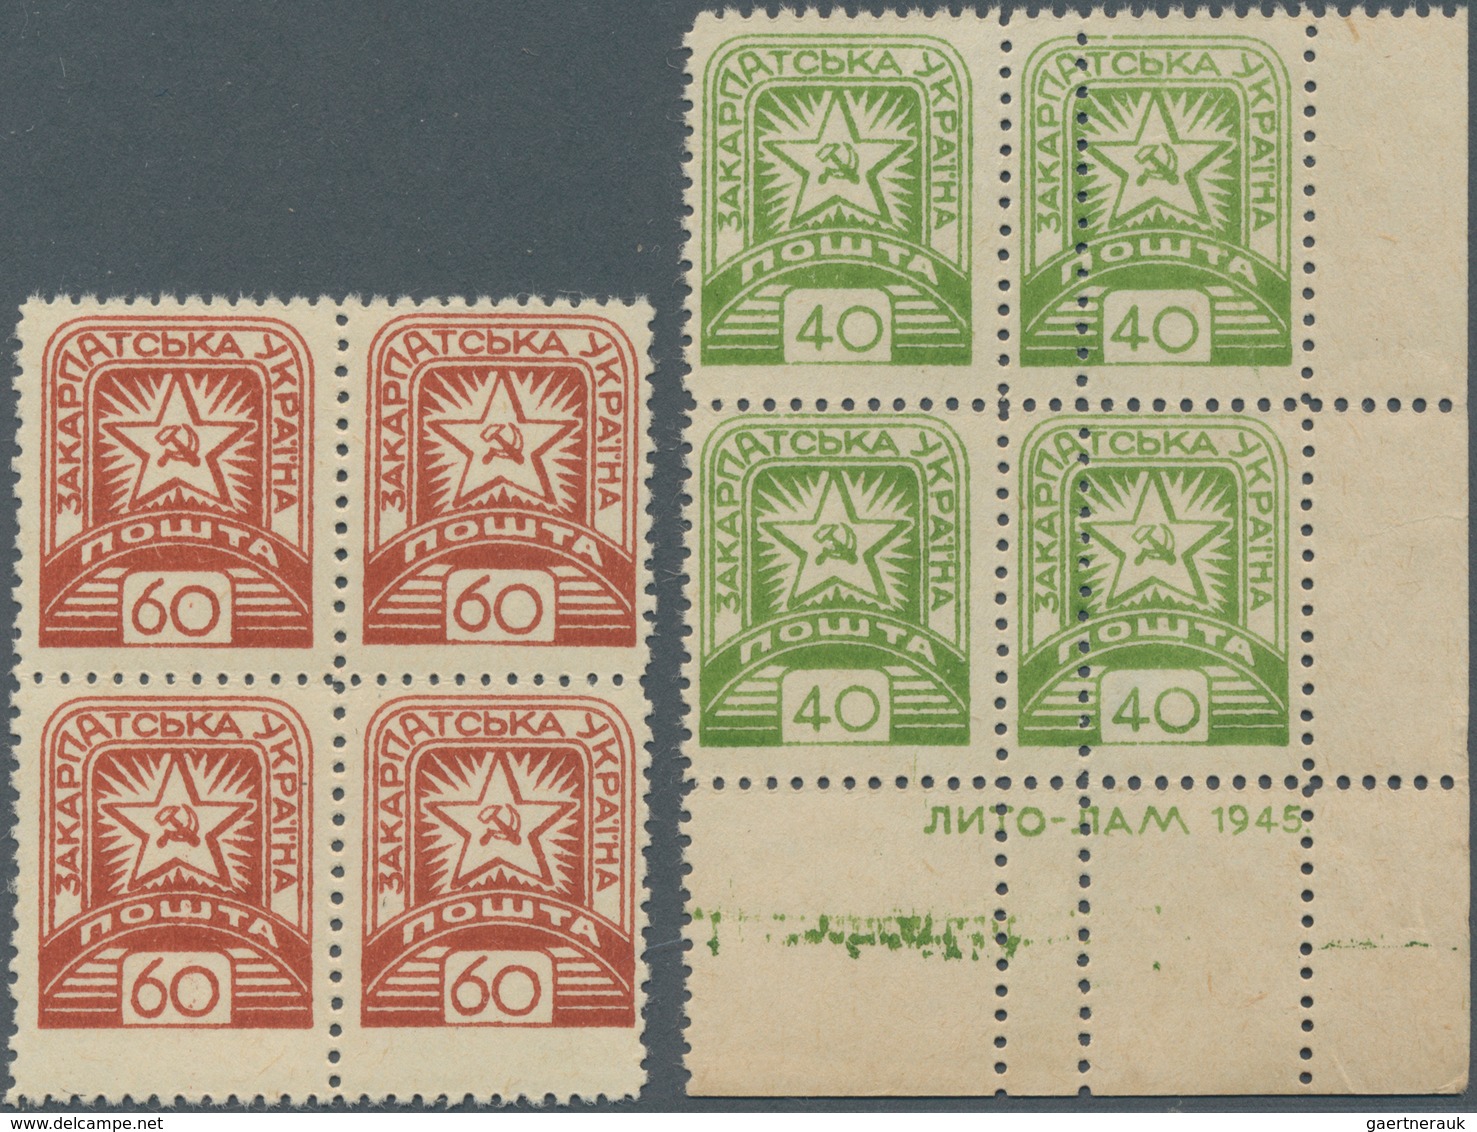 Karpaten-Ukraine: 1945, Definitives "Soviet Star", U/m Assortment Of Apprx. 212 Stamps Within Units, - Oekraïne